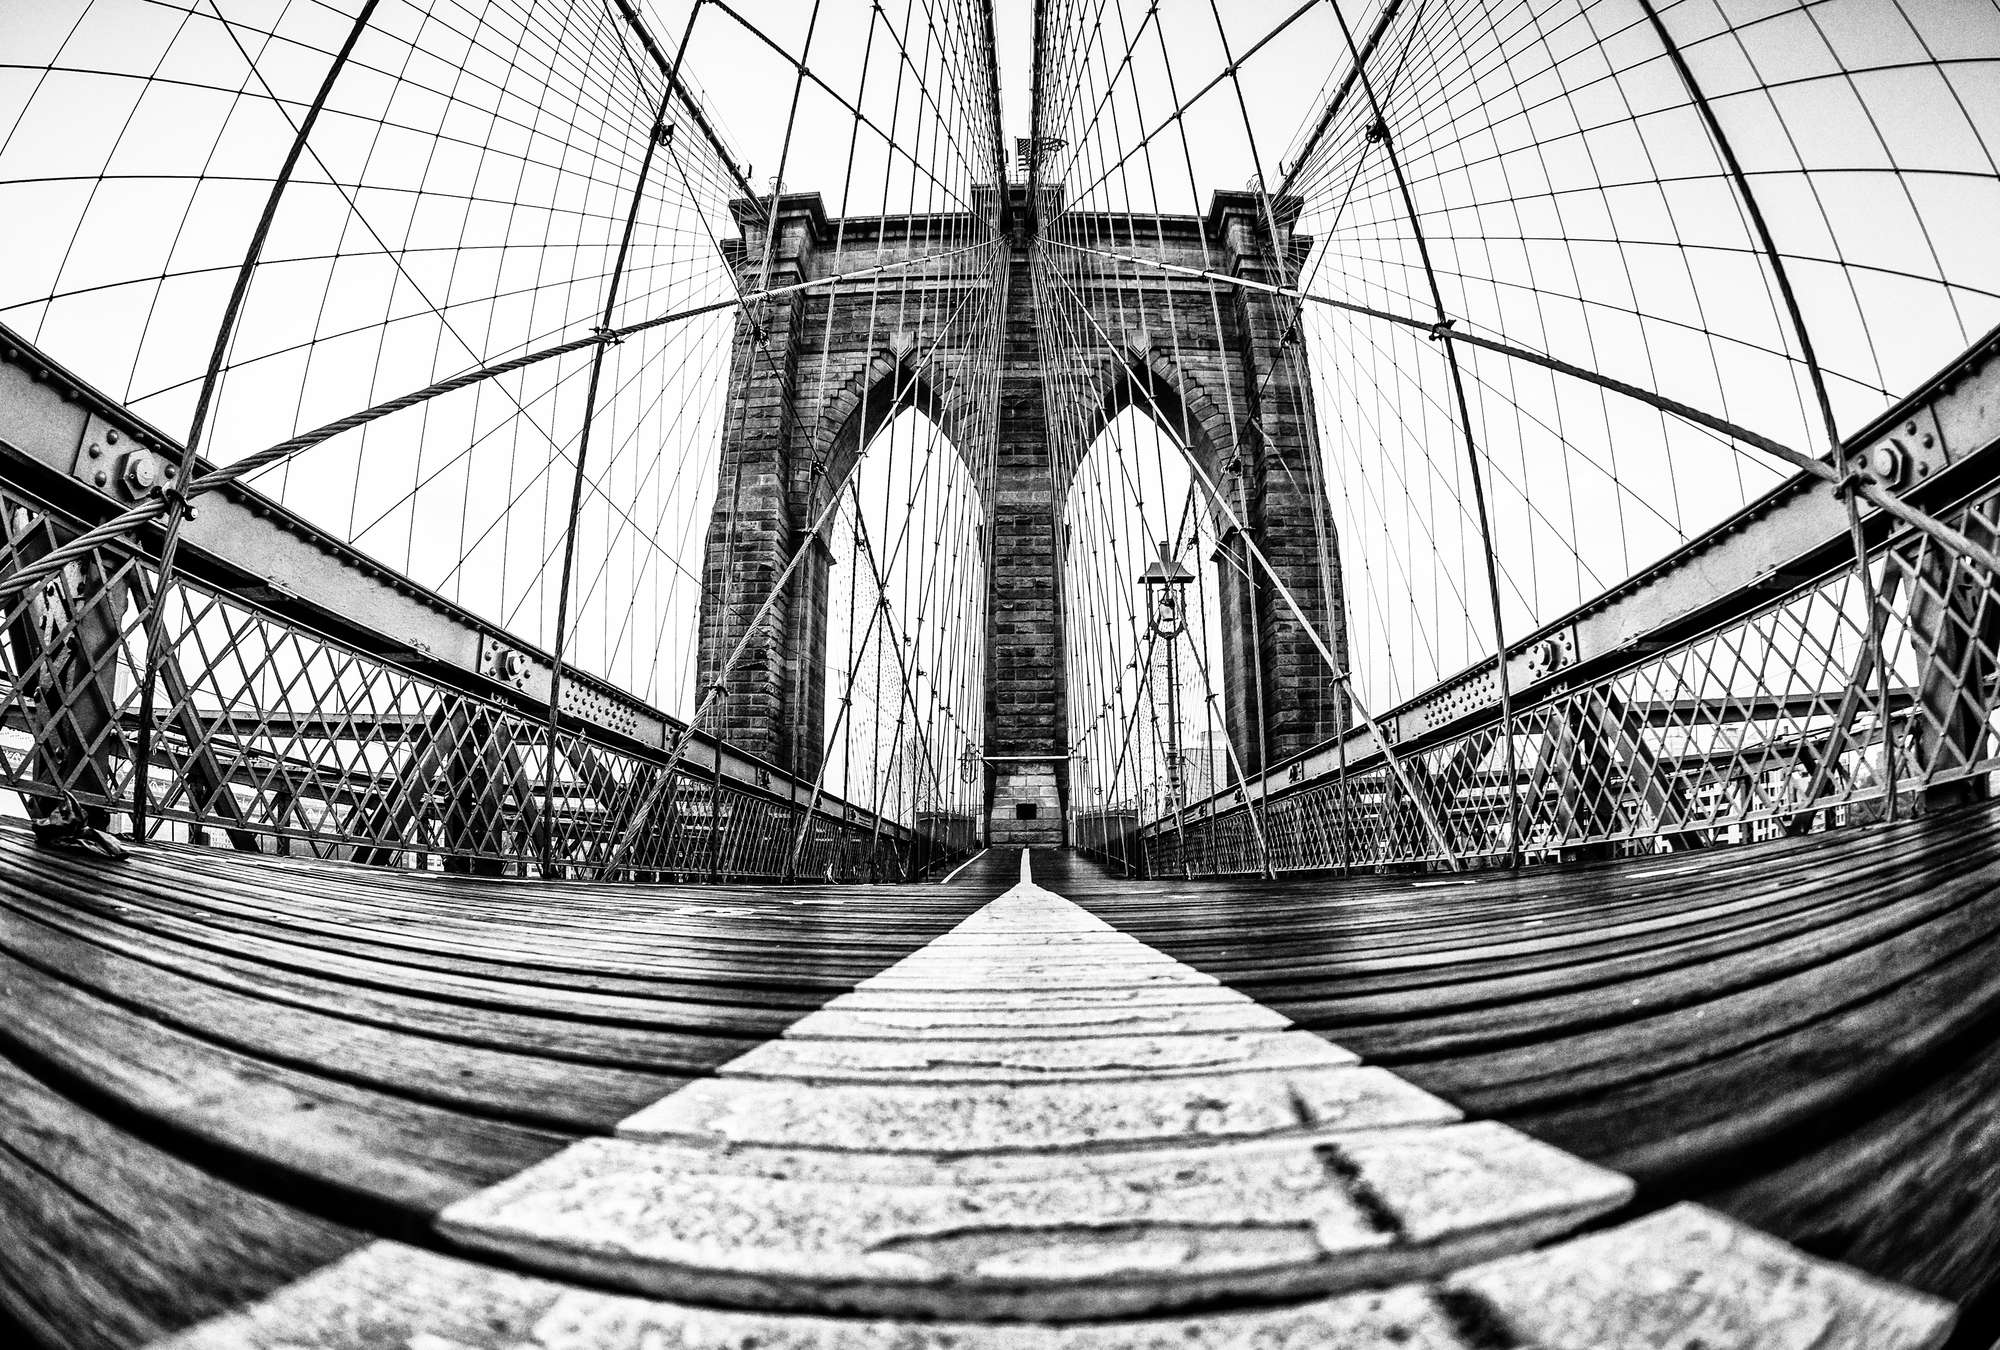             Fototapete Brooklyn Bridge in Schwarz-Weiß – Perlmutt Glattvlies
        